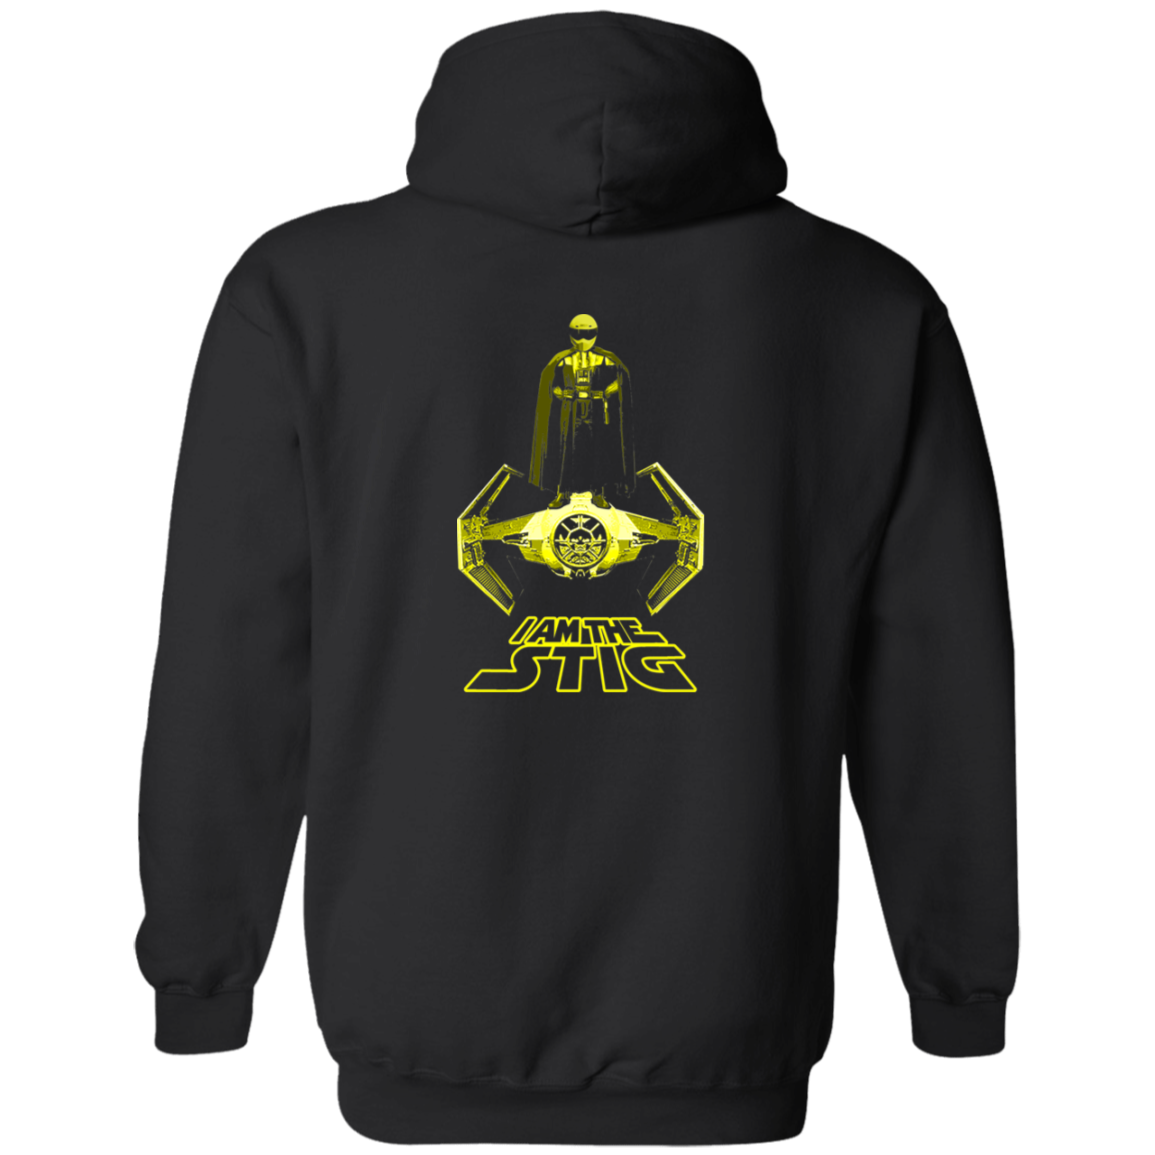 ArtichokeUSA Custom Design. I am the Stig. Vader/ The Stig Fan Art. Zip Up Hooded Sweatshirt